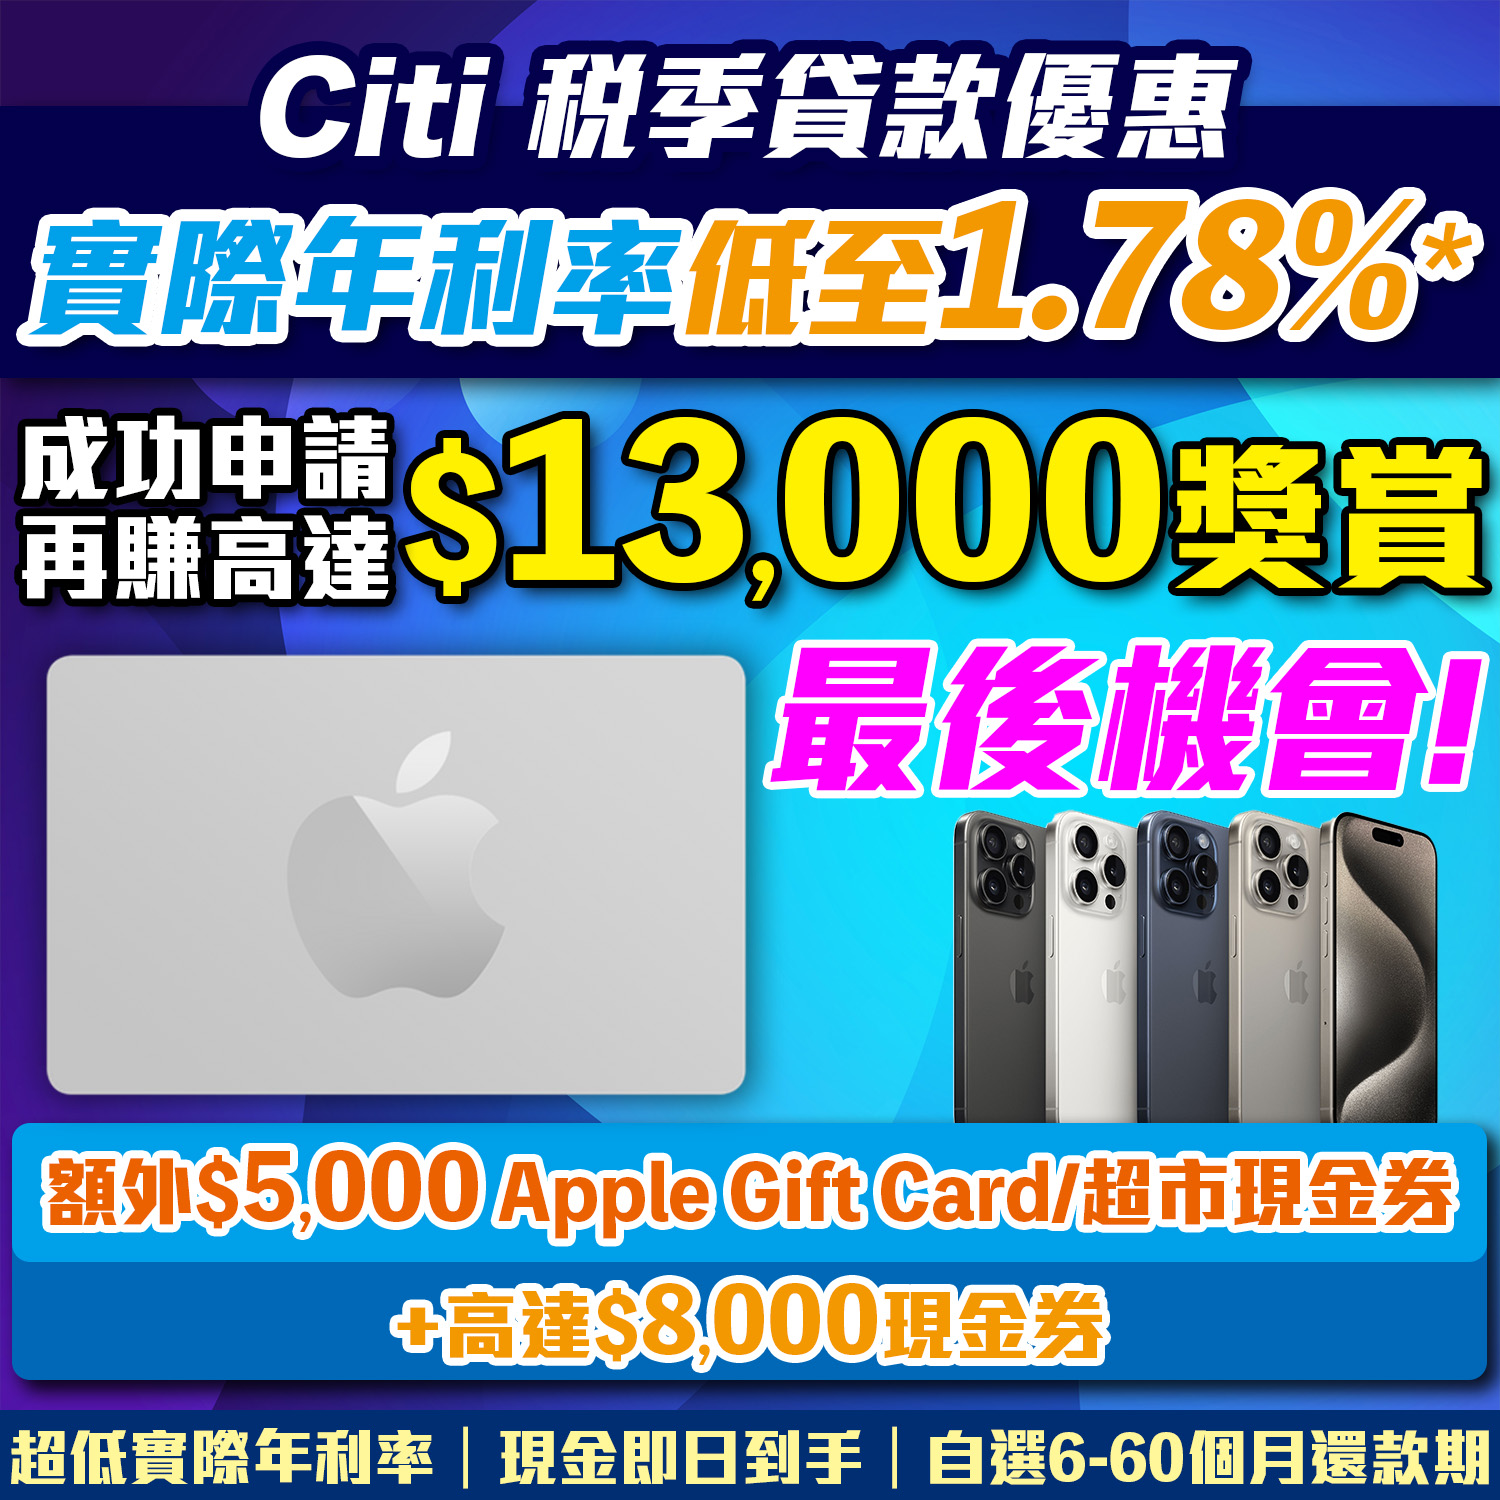 【Citi稅季貸款限時優惠】賺高達HK$13,000獎賞，包括里先生額外Apple Gift Card/超市現金券！實際年利率低至1.78%*！